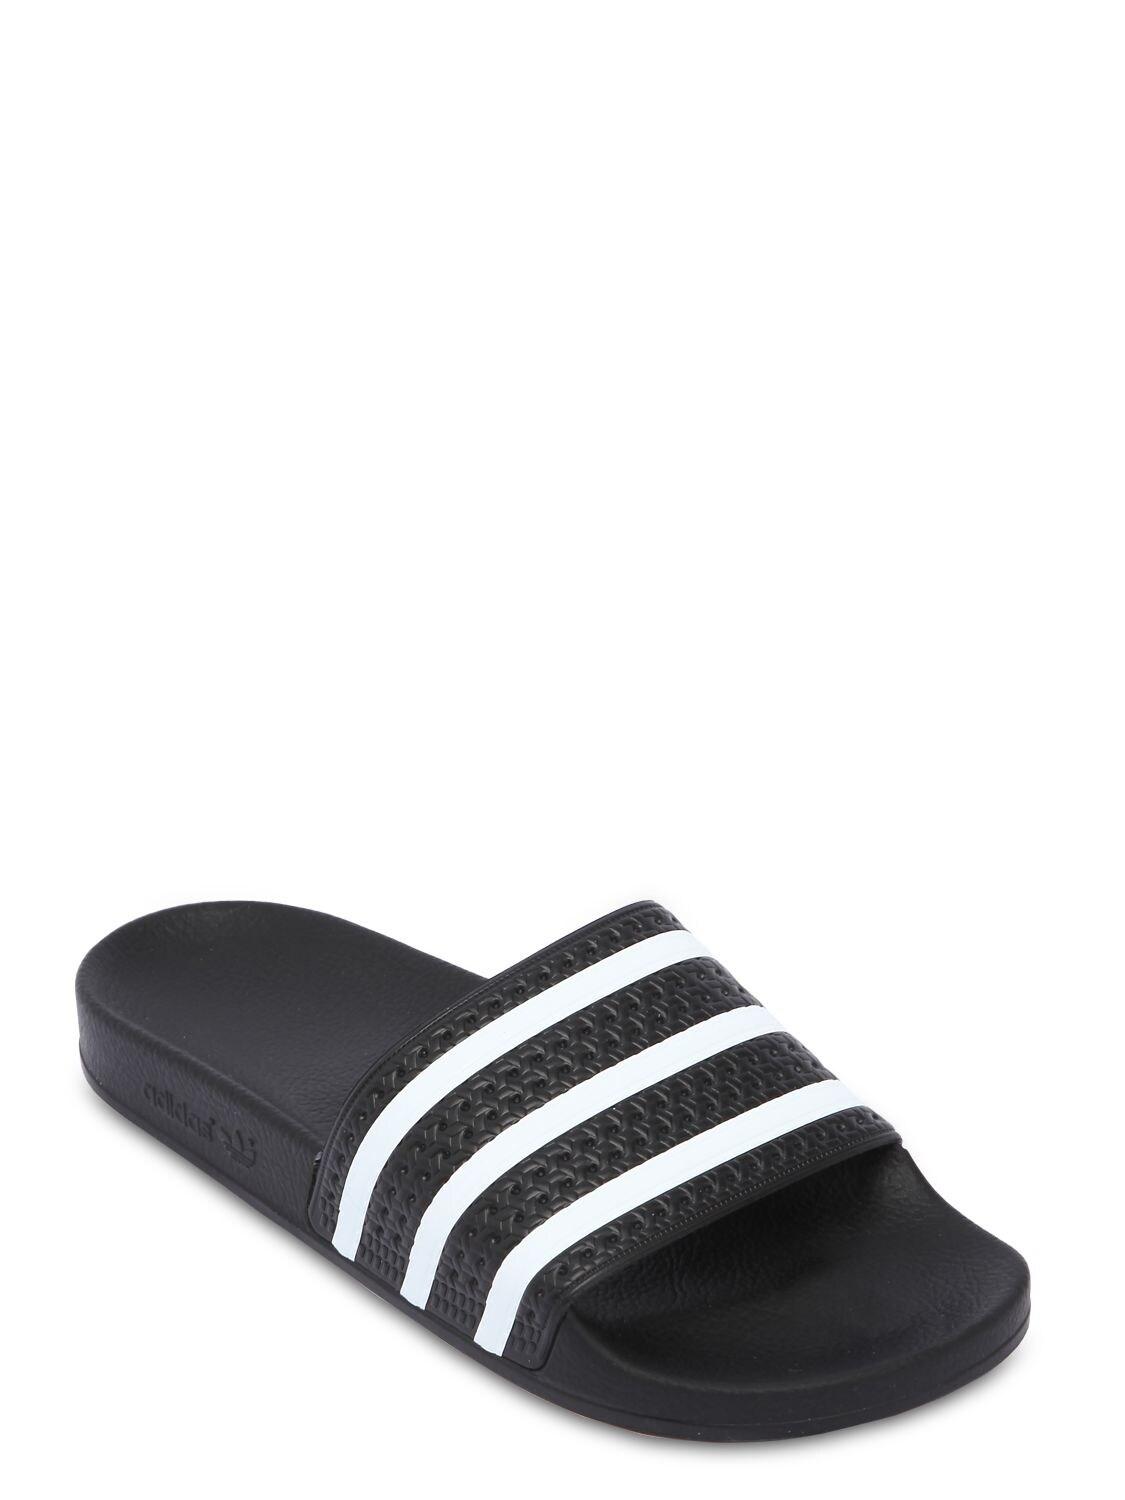 adidas Originals Adilette Slide Sandals in Black for Men - Lyst